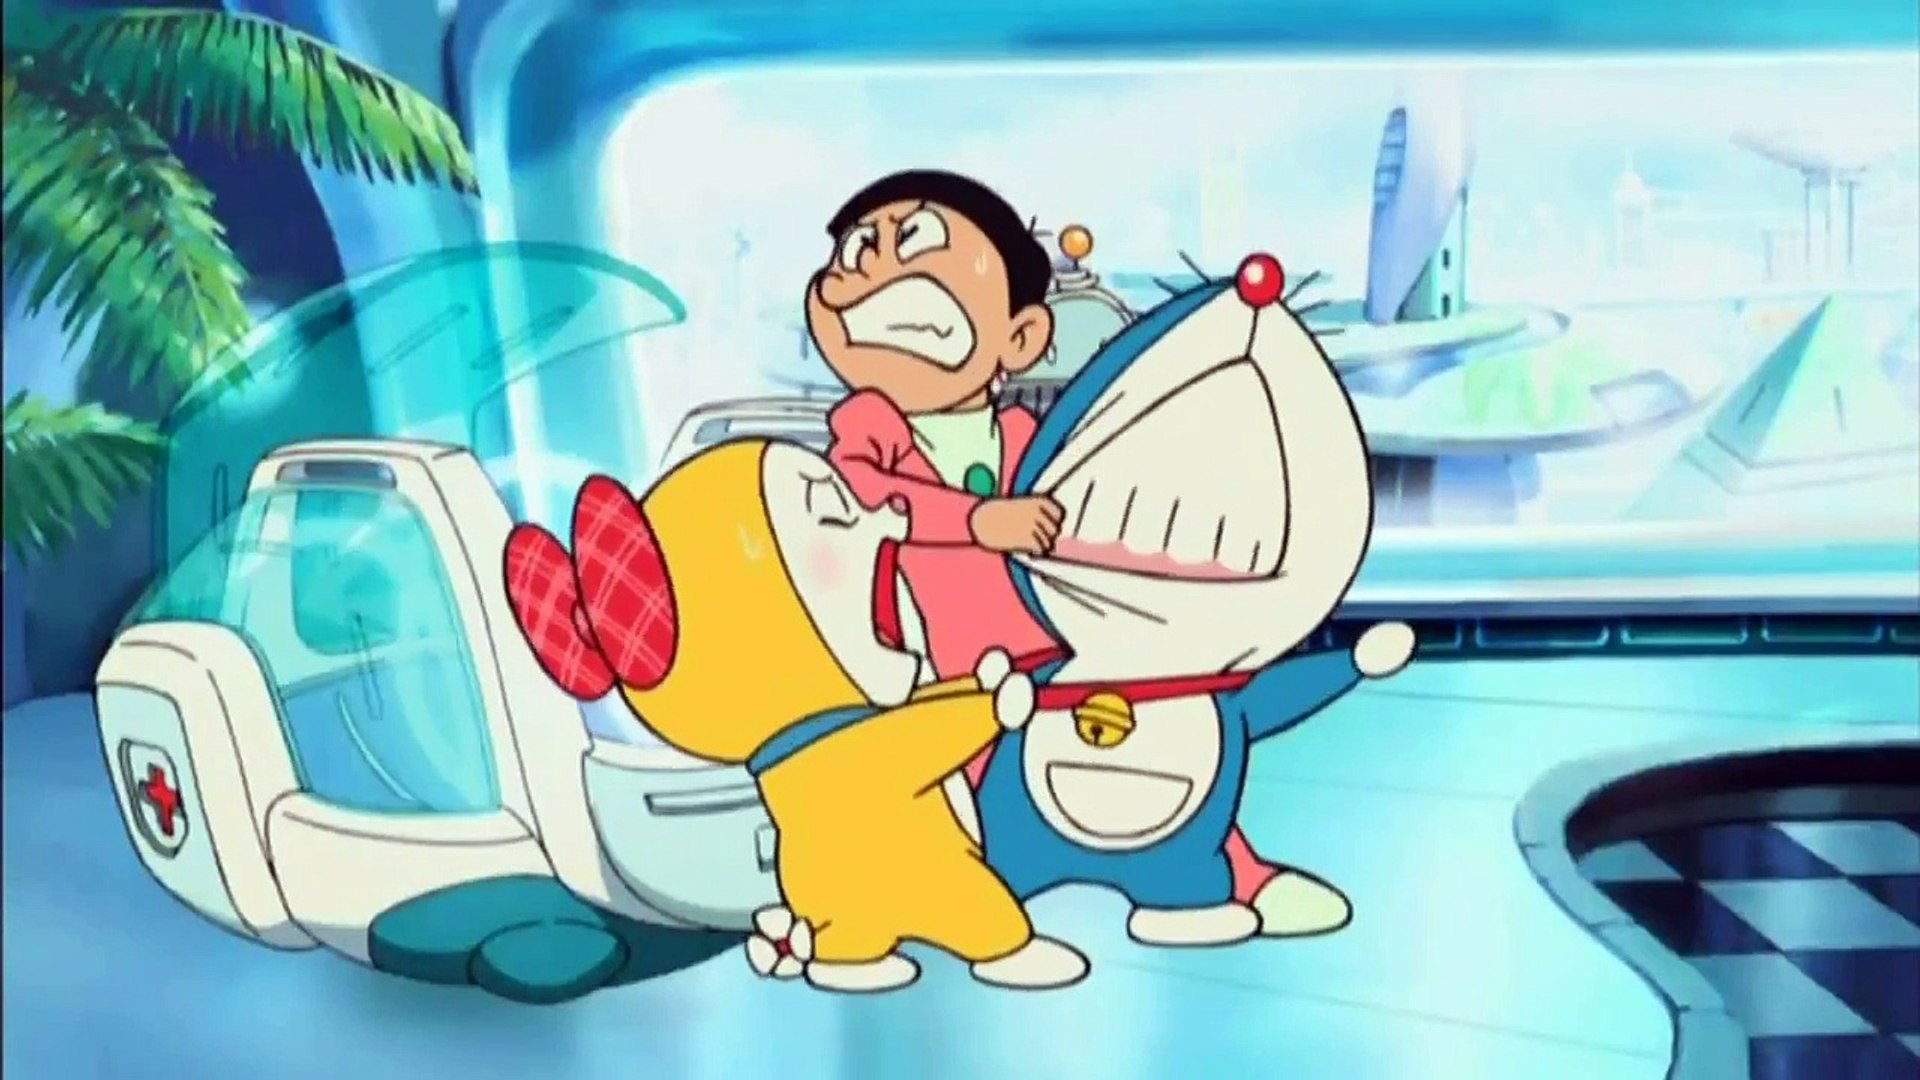 Doraemon The Movie (2007)